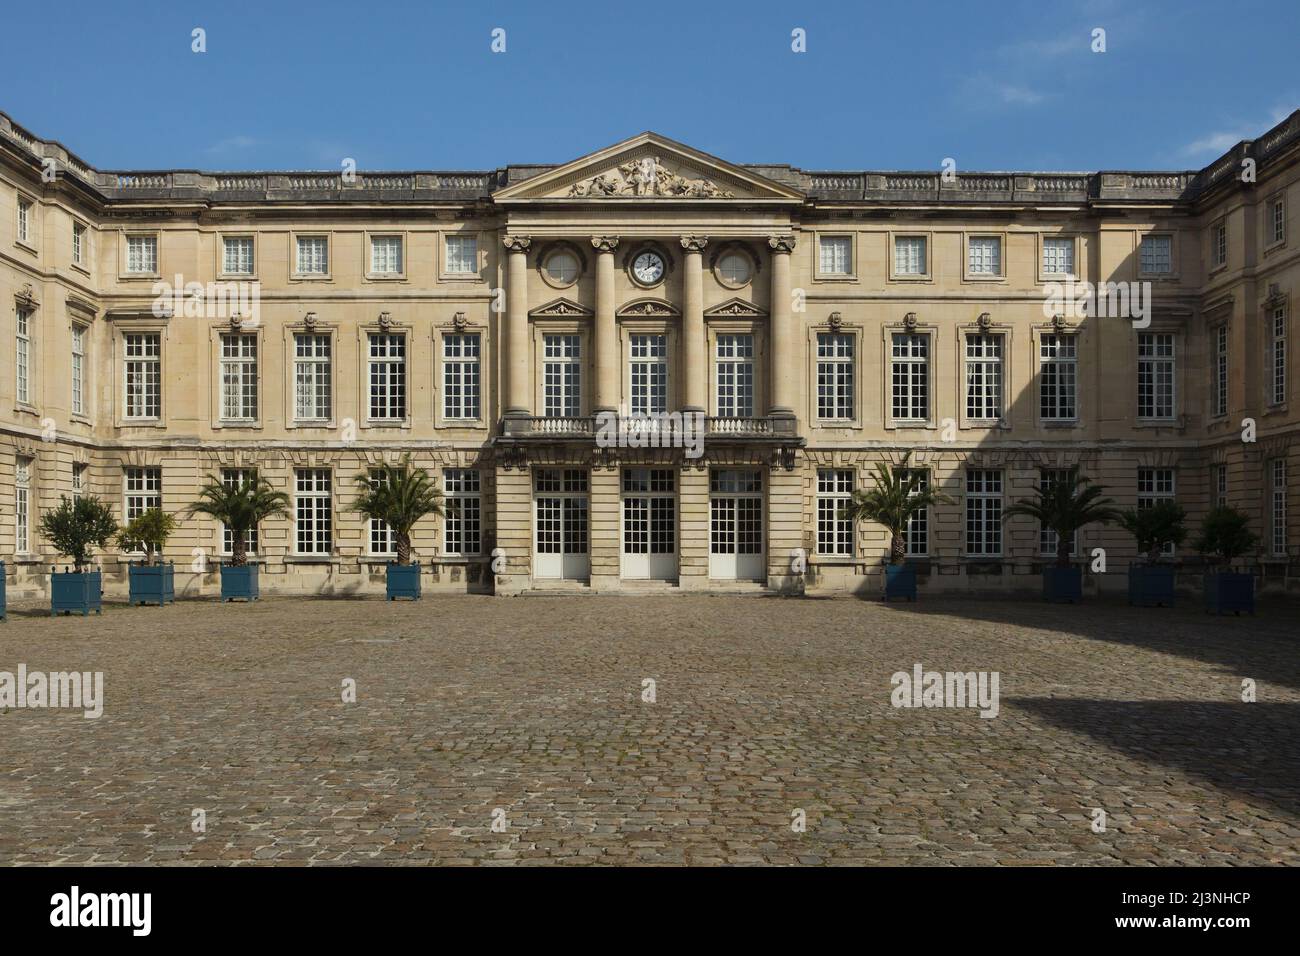 Courtyard facade of the Château de Compiègne in Compiègne, France. Stock Photo